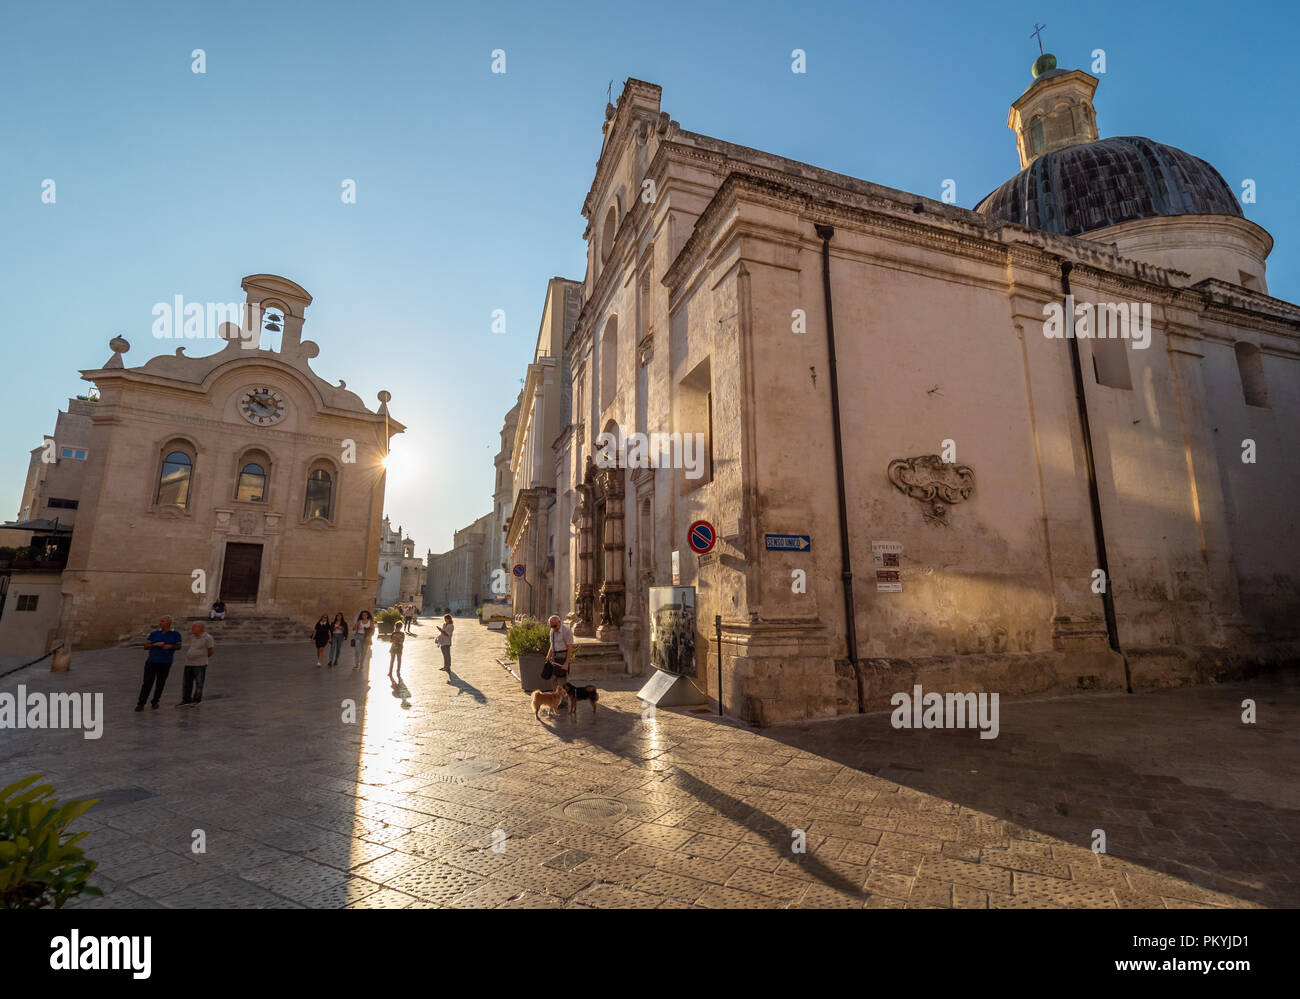 Gravina in Puglia (Italy) - The suggestive old city in stone like Matera, in province of Bari, Apulia region. Here a view of the historic center. Stock Photo